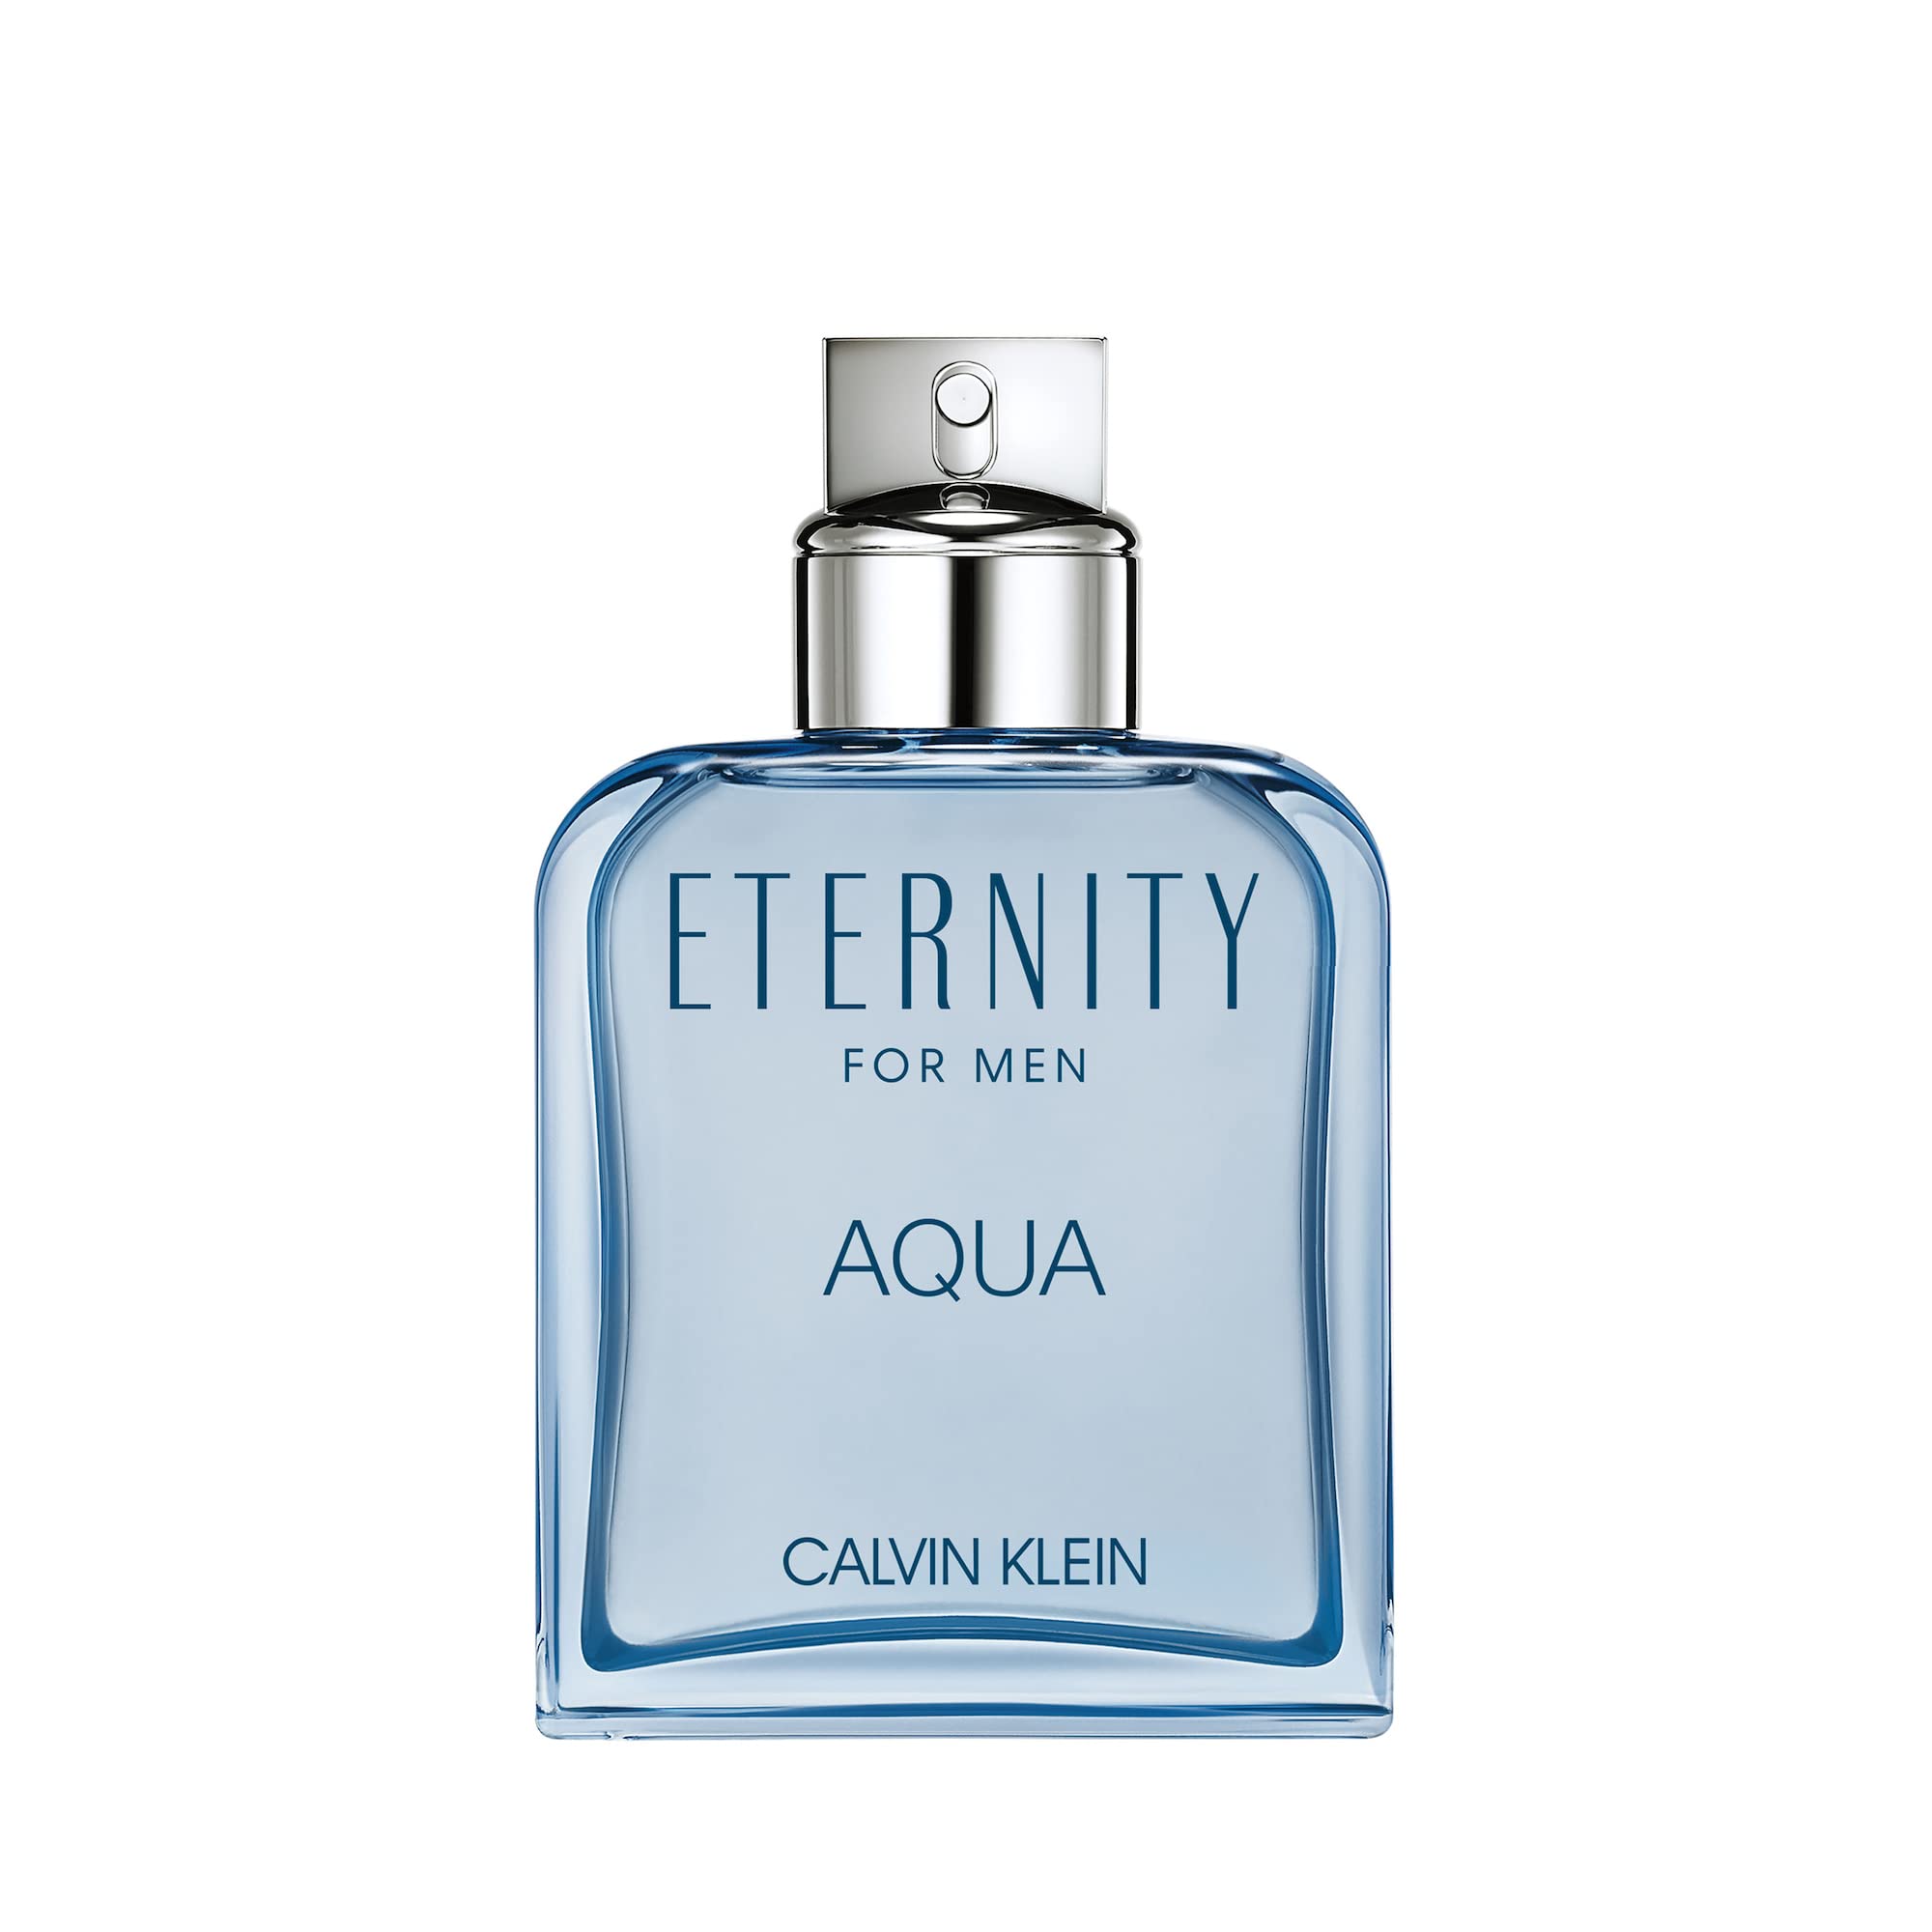 Mua Calvin Klein ETERNITY for Men AQUA trên Amazon Mỹ chính hãng 2023 | Fado